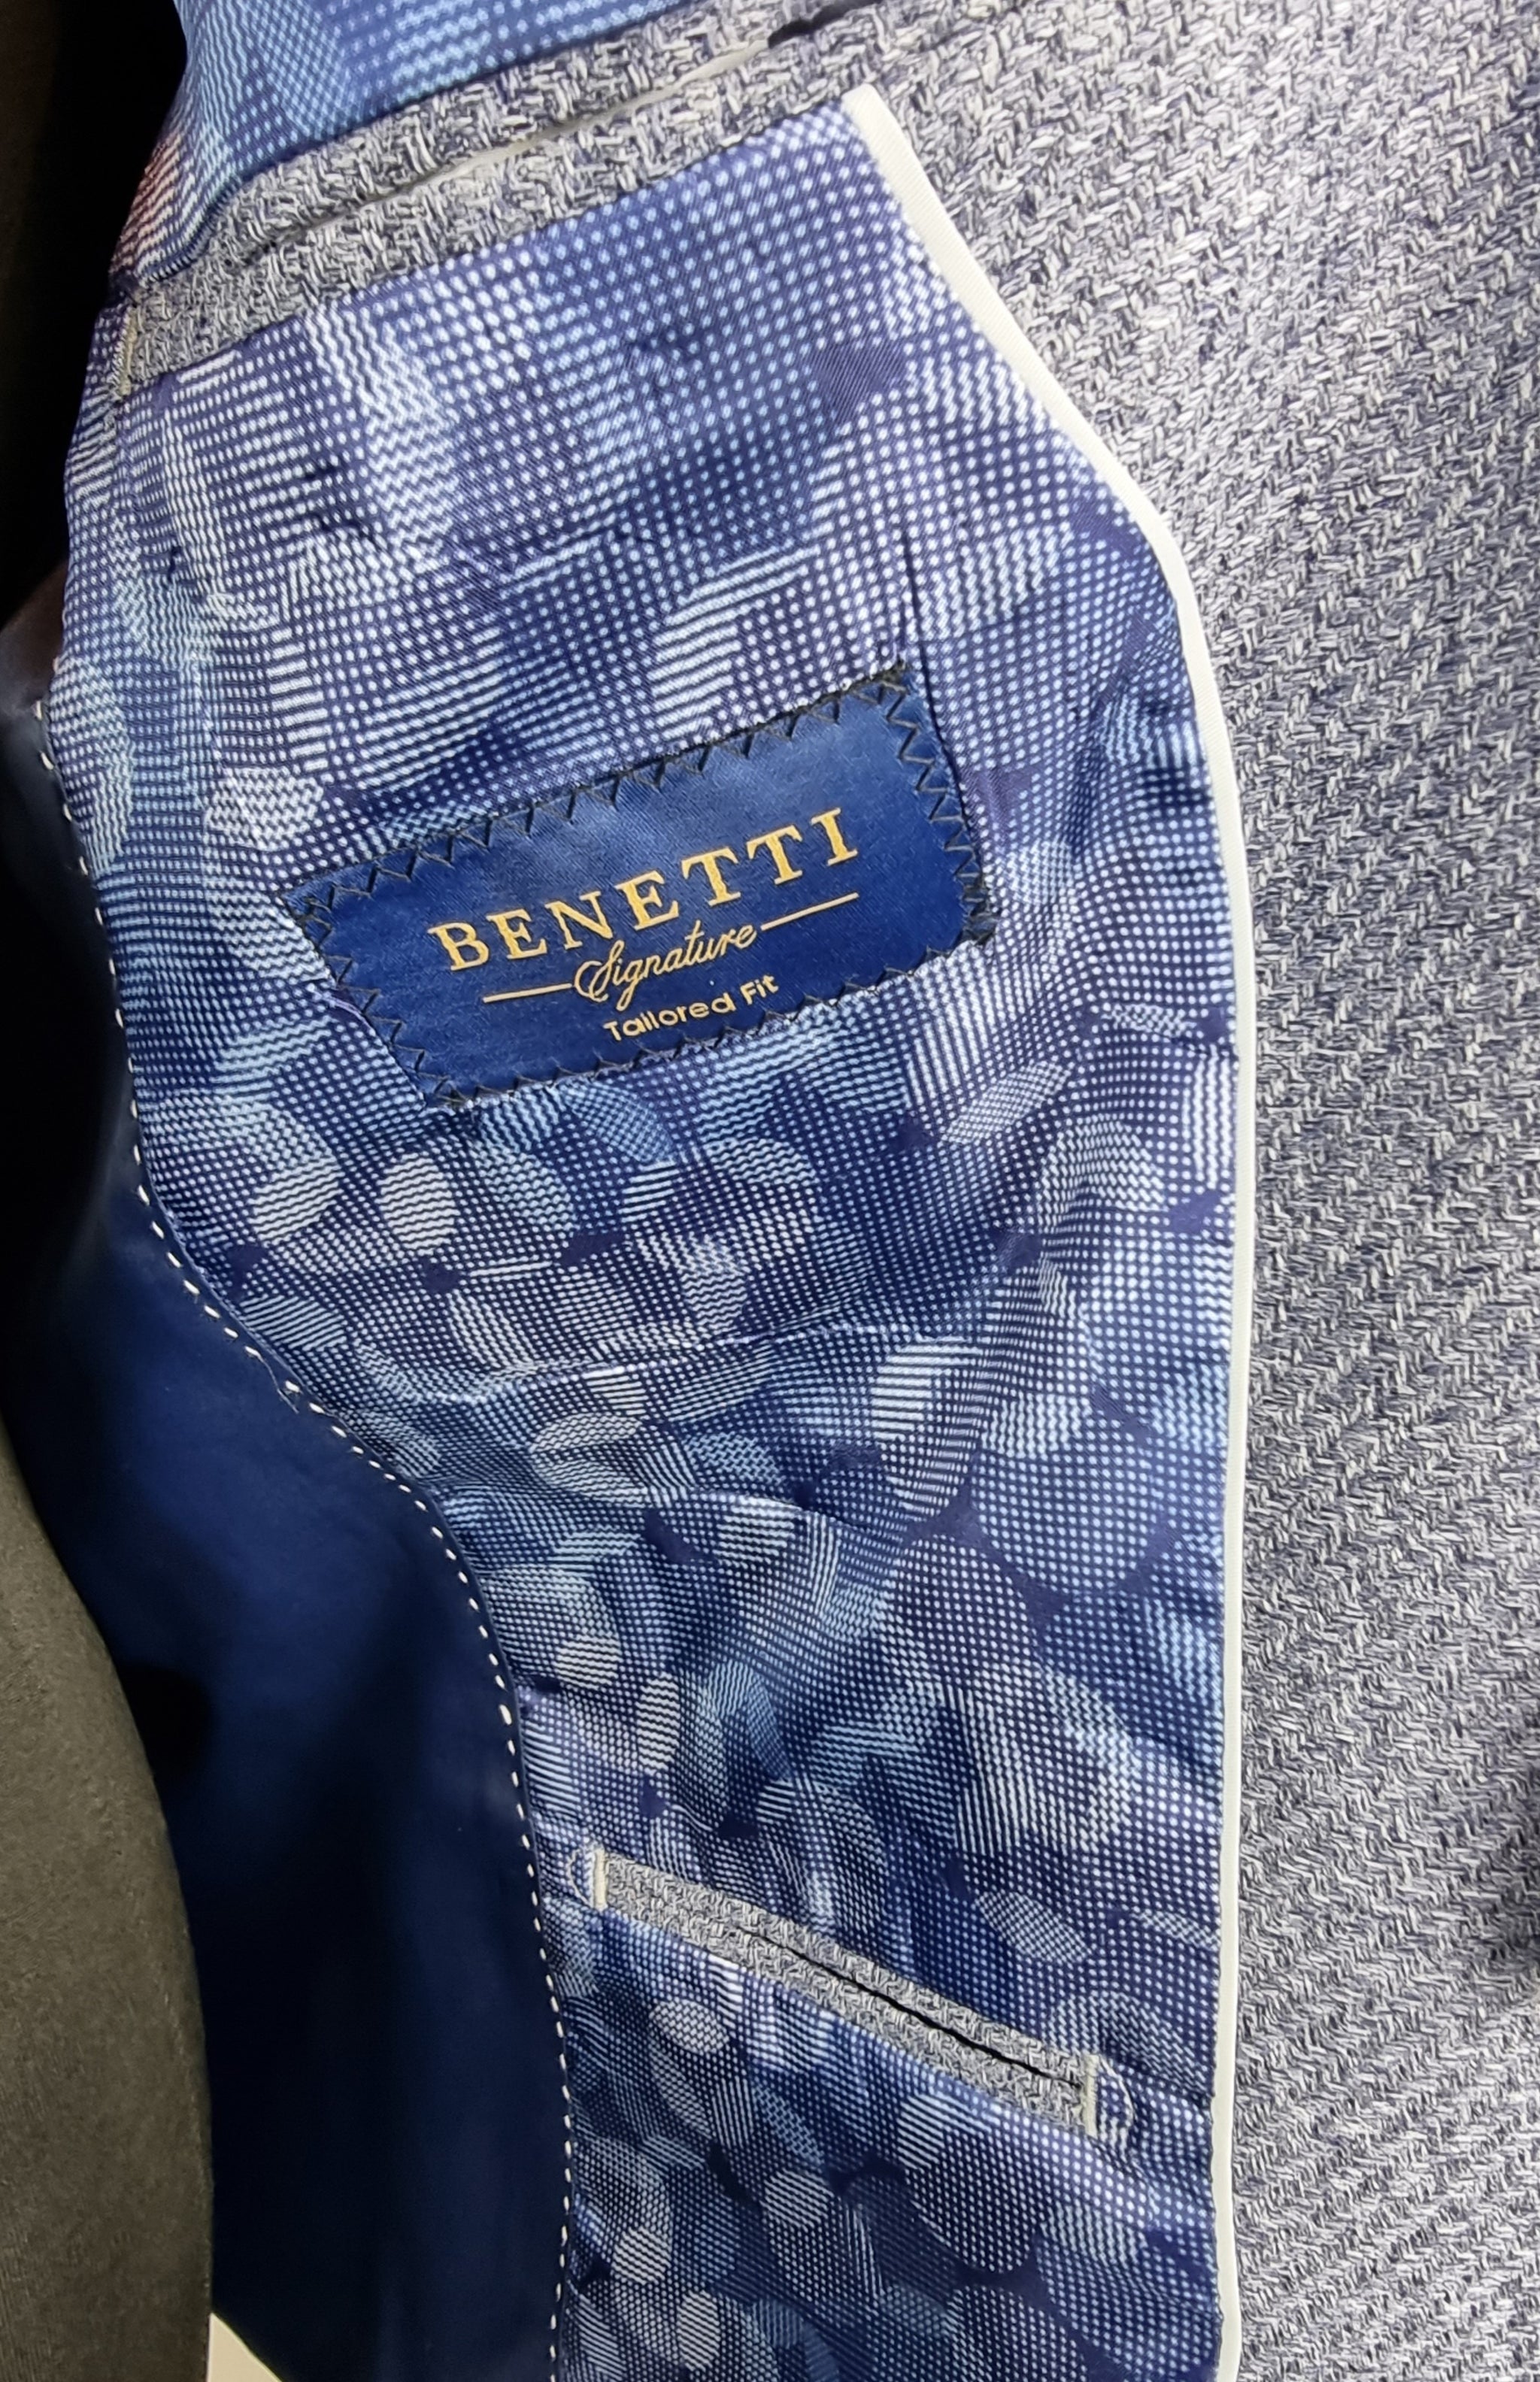 Benetti "Simon" Blue Jacket